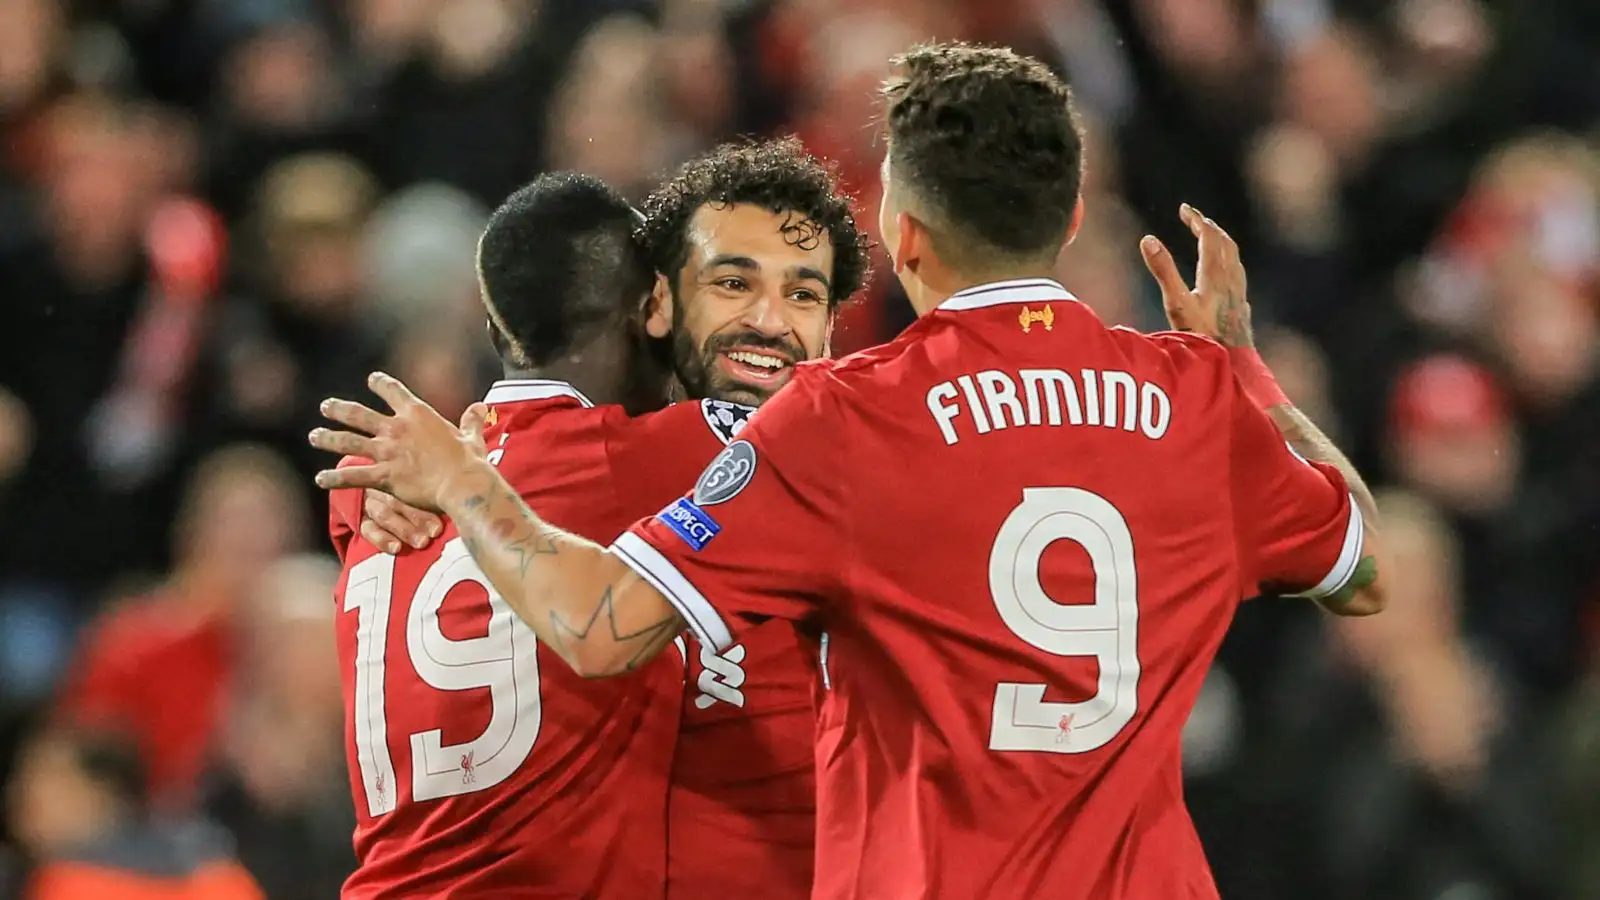 Liverpool trio Mohamed Salah, Sadio Mane and Roberto Firmino